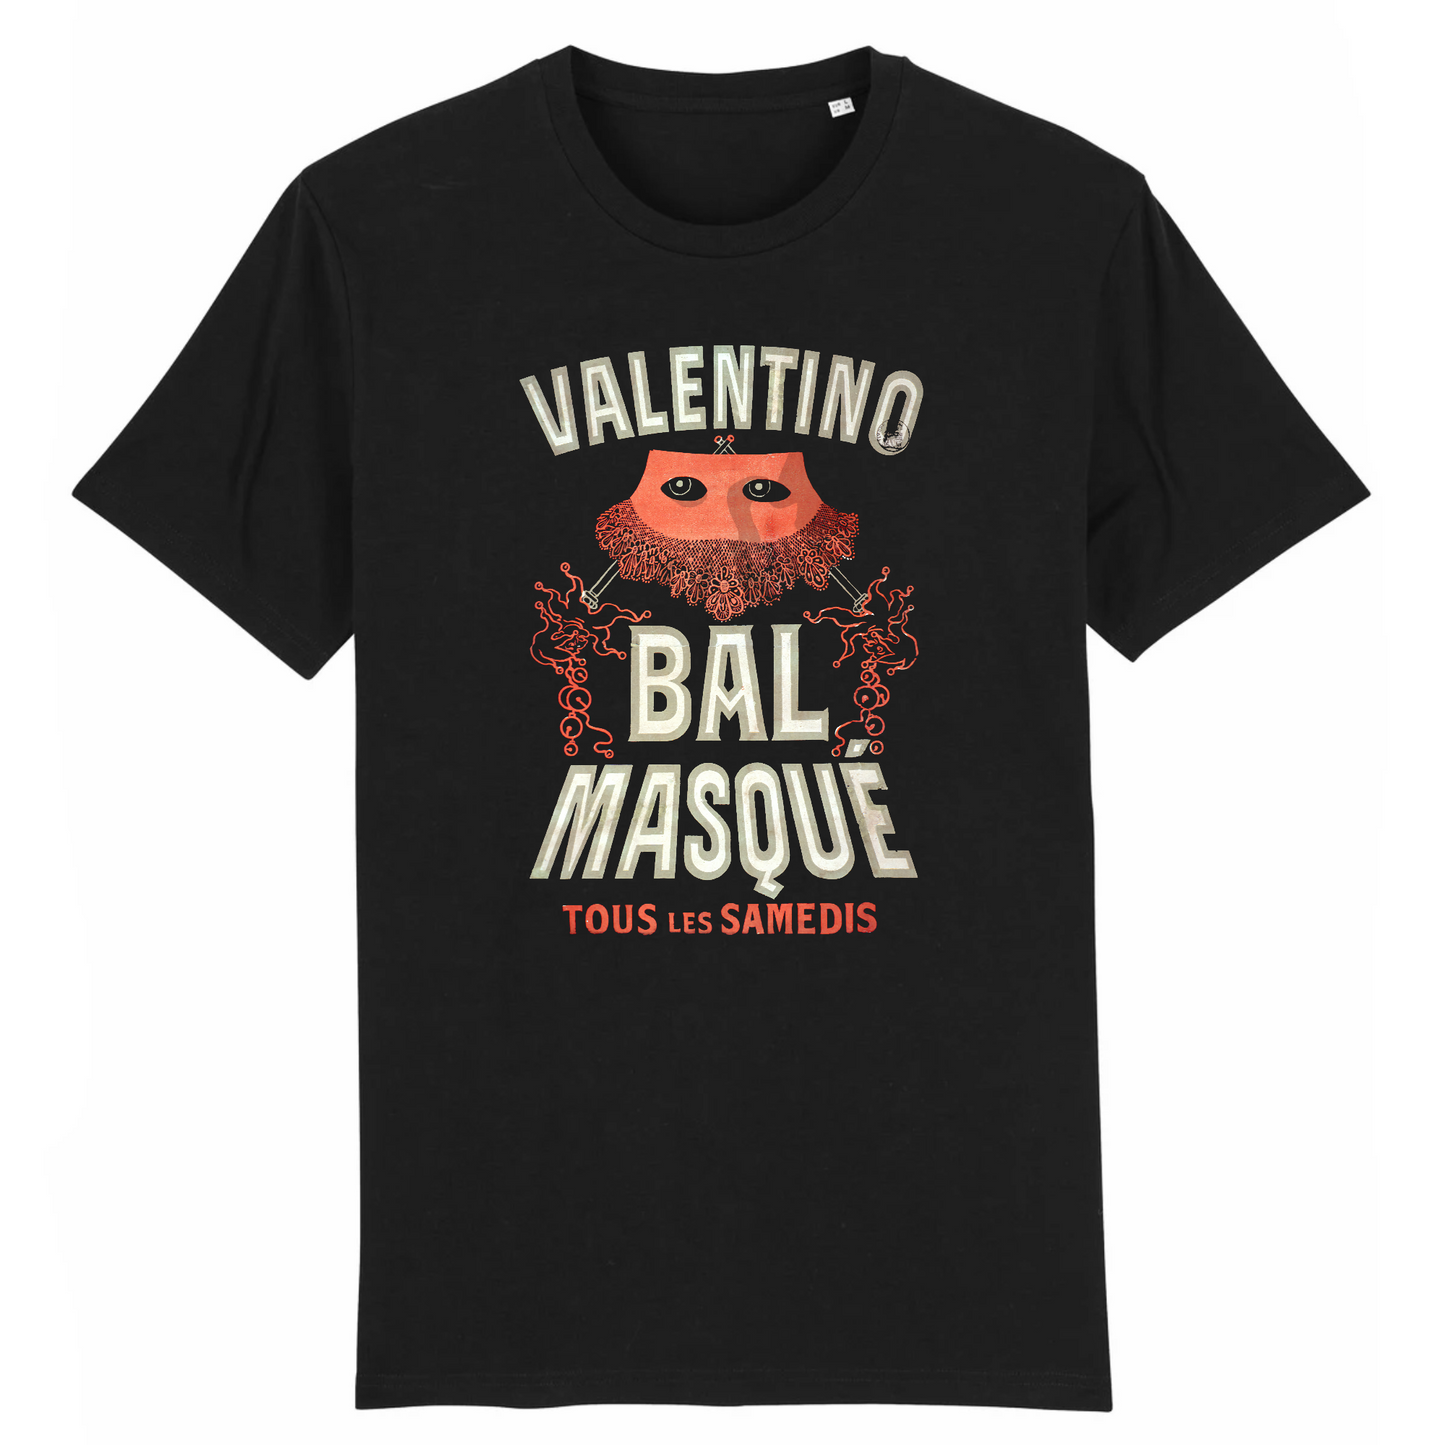 Valentino Bal Masqué by Jules Cheret 1875 - Camiseta de algodón orgánico